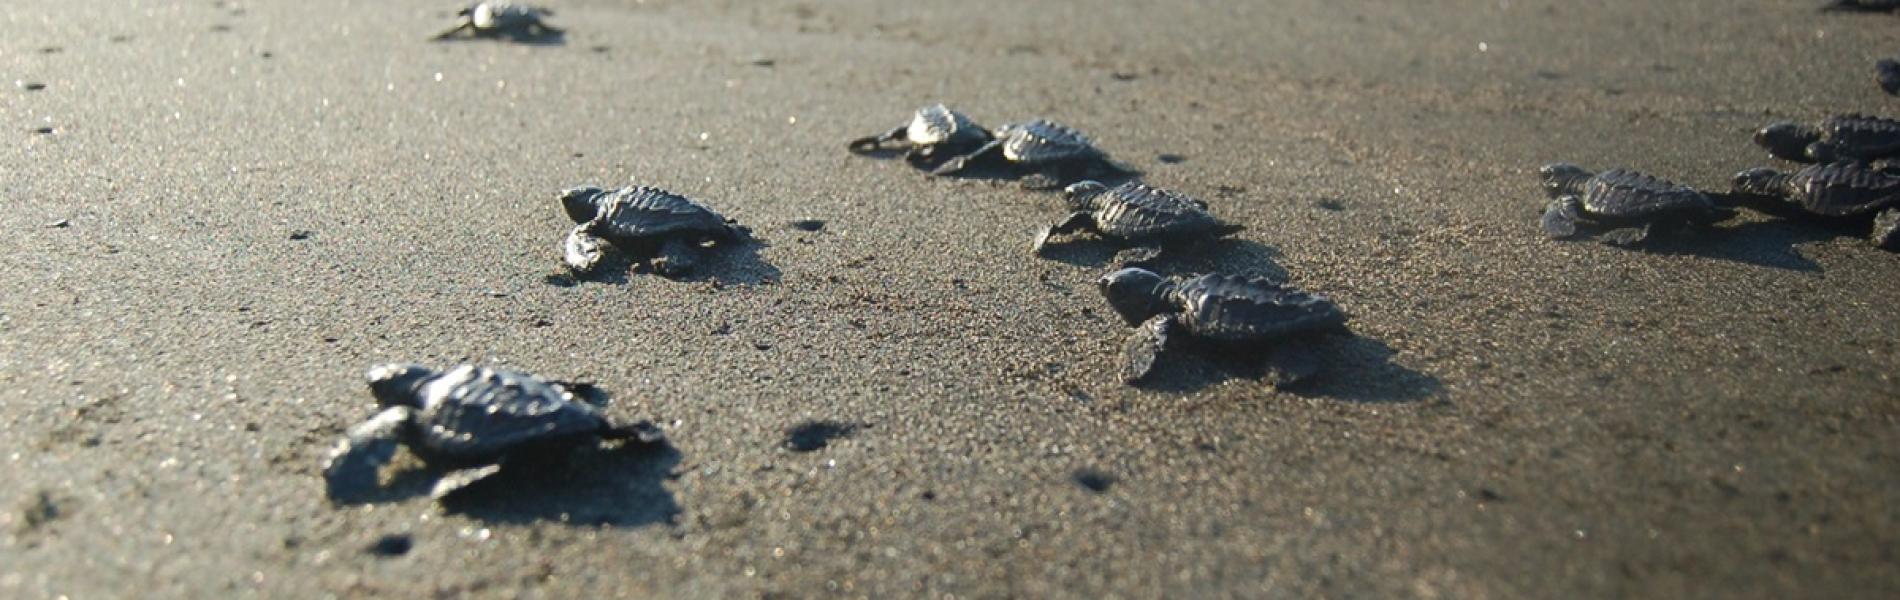 Baby sea turtles on the sand headed towards the ocean